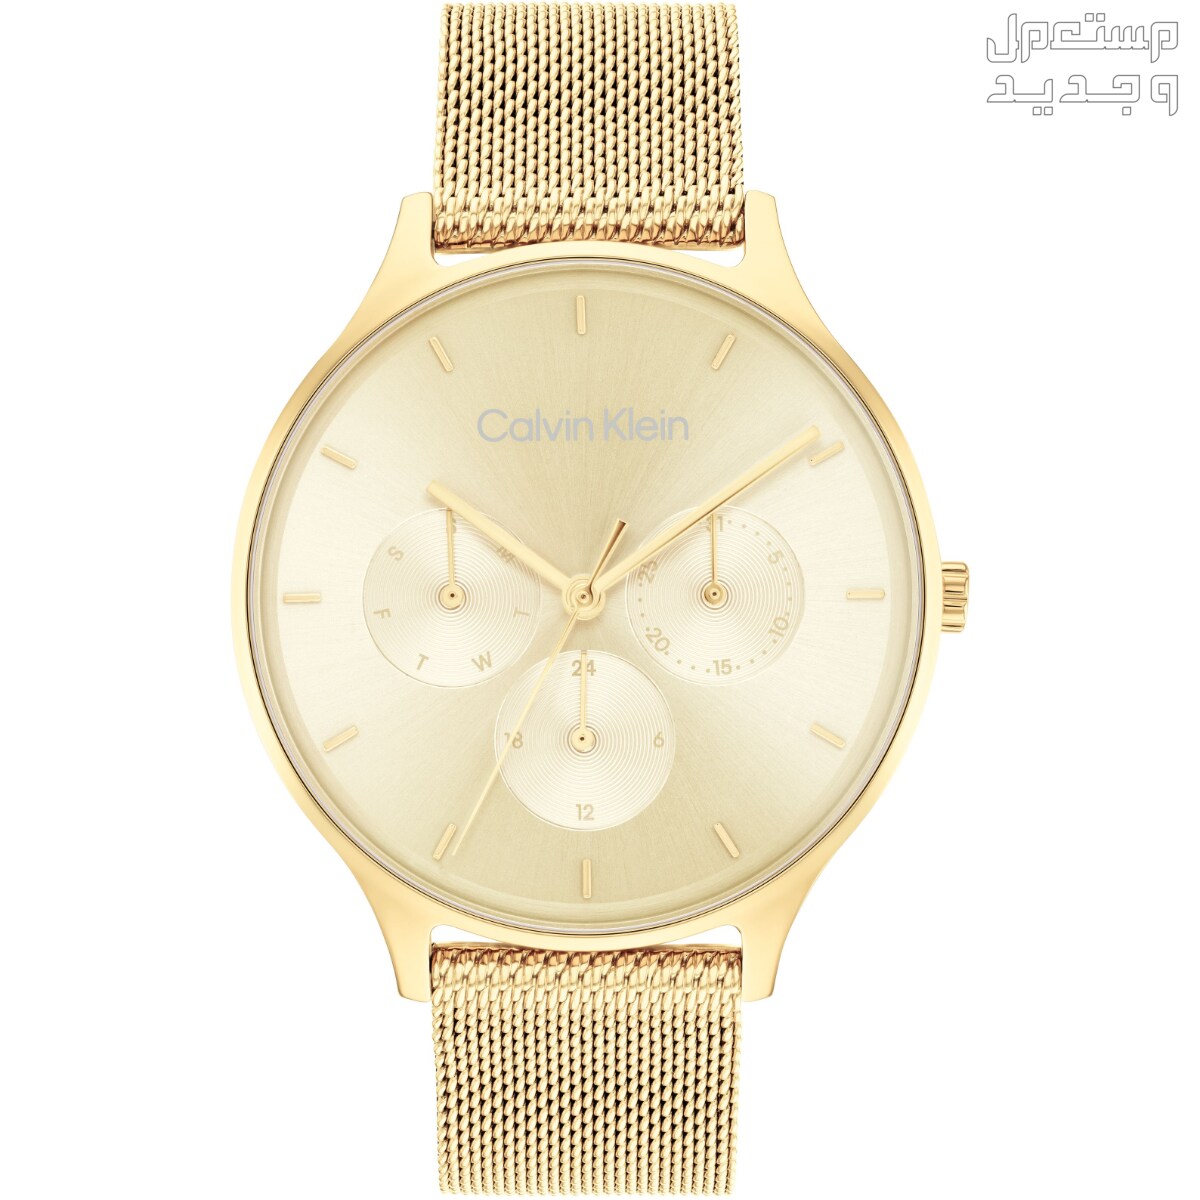 أنواع ساعات يد ذهب نسائية واسعارها في السودان ساعة Calvin Klein Timeless Multifunction Day and Date Gold Steel Watch 25200103